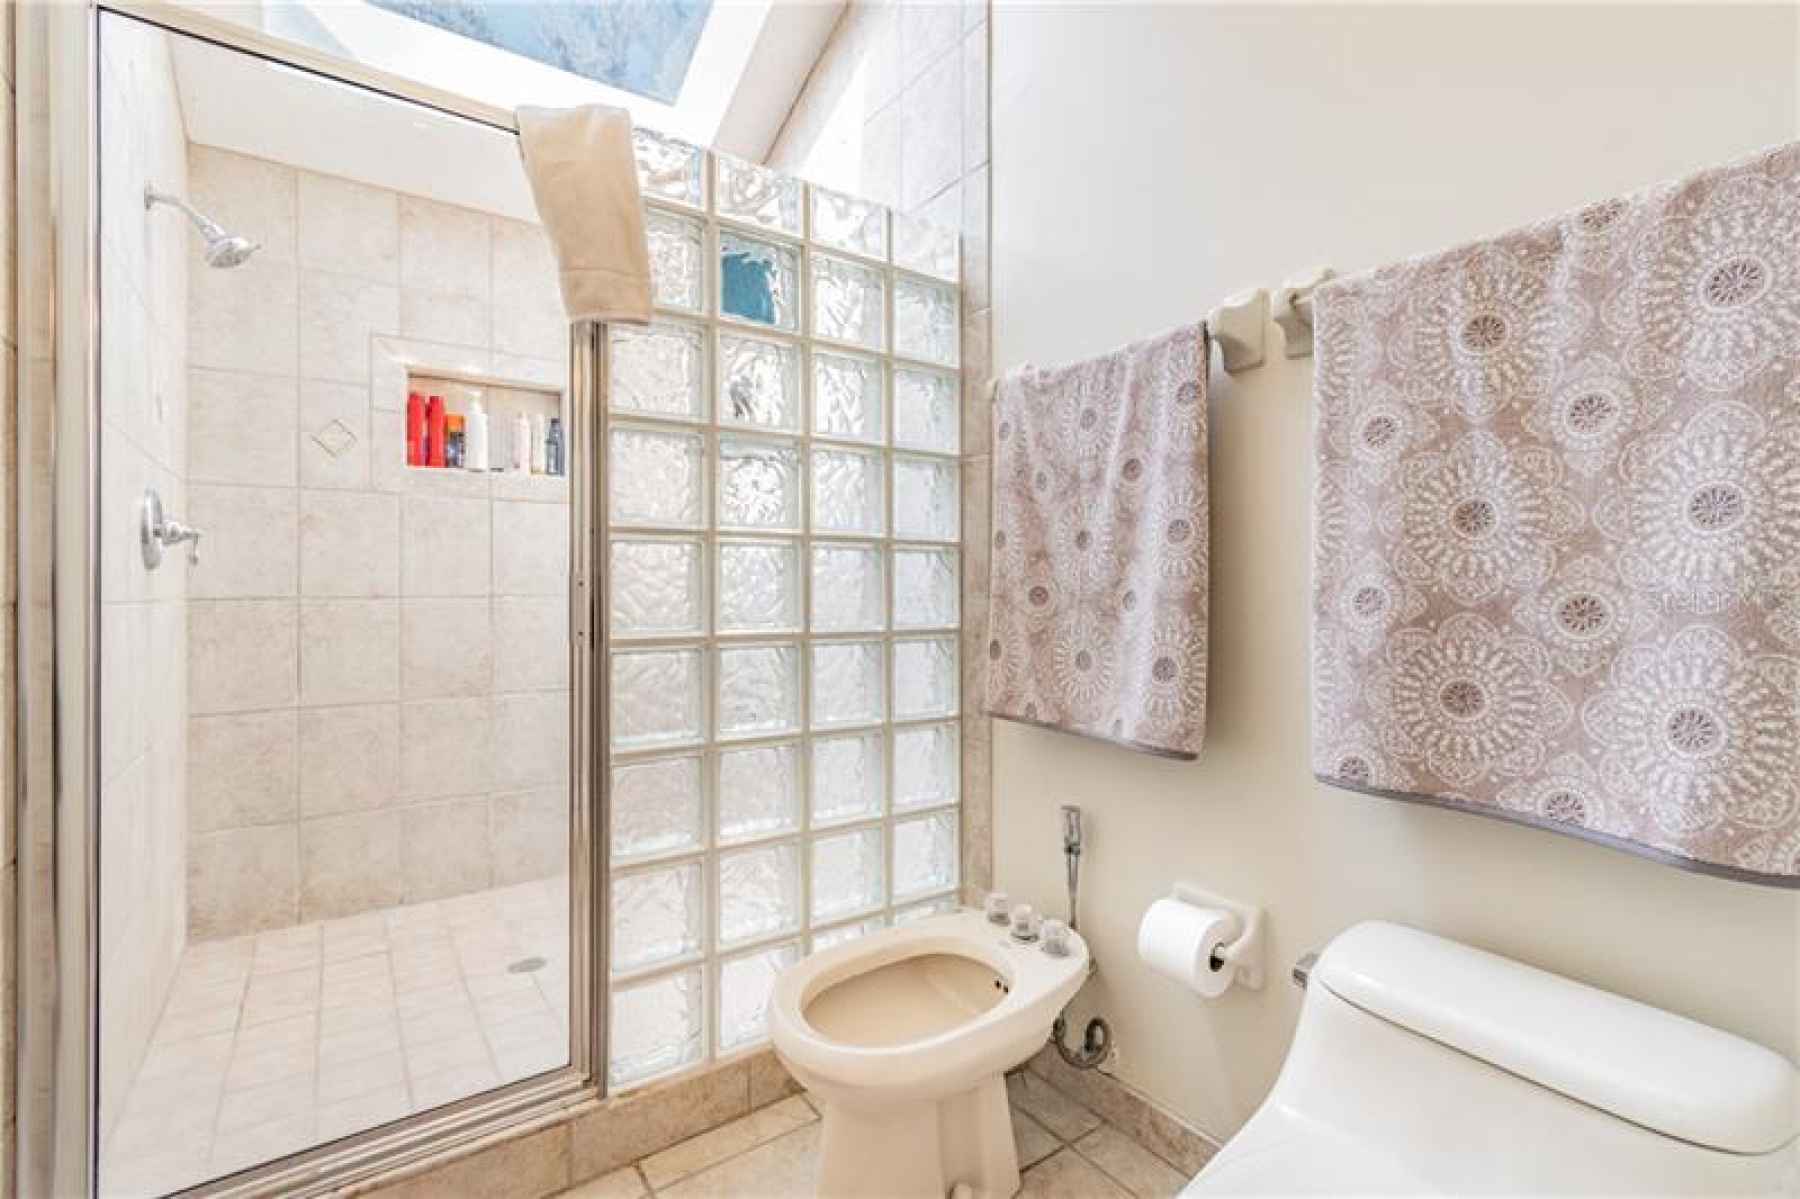 Bathroom shower with skylight and bidet.